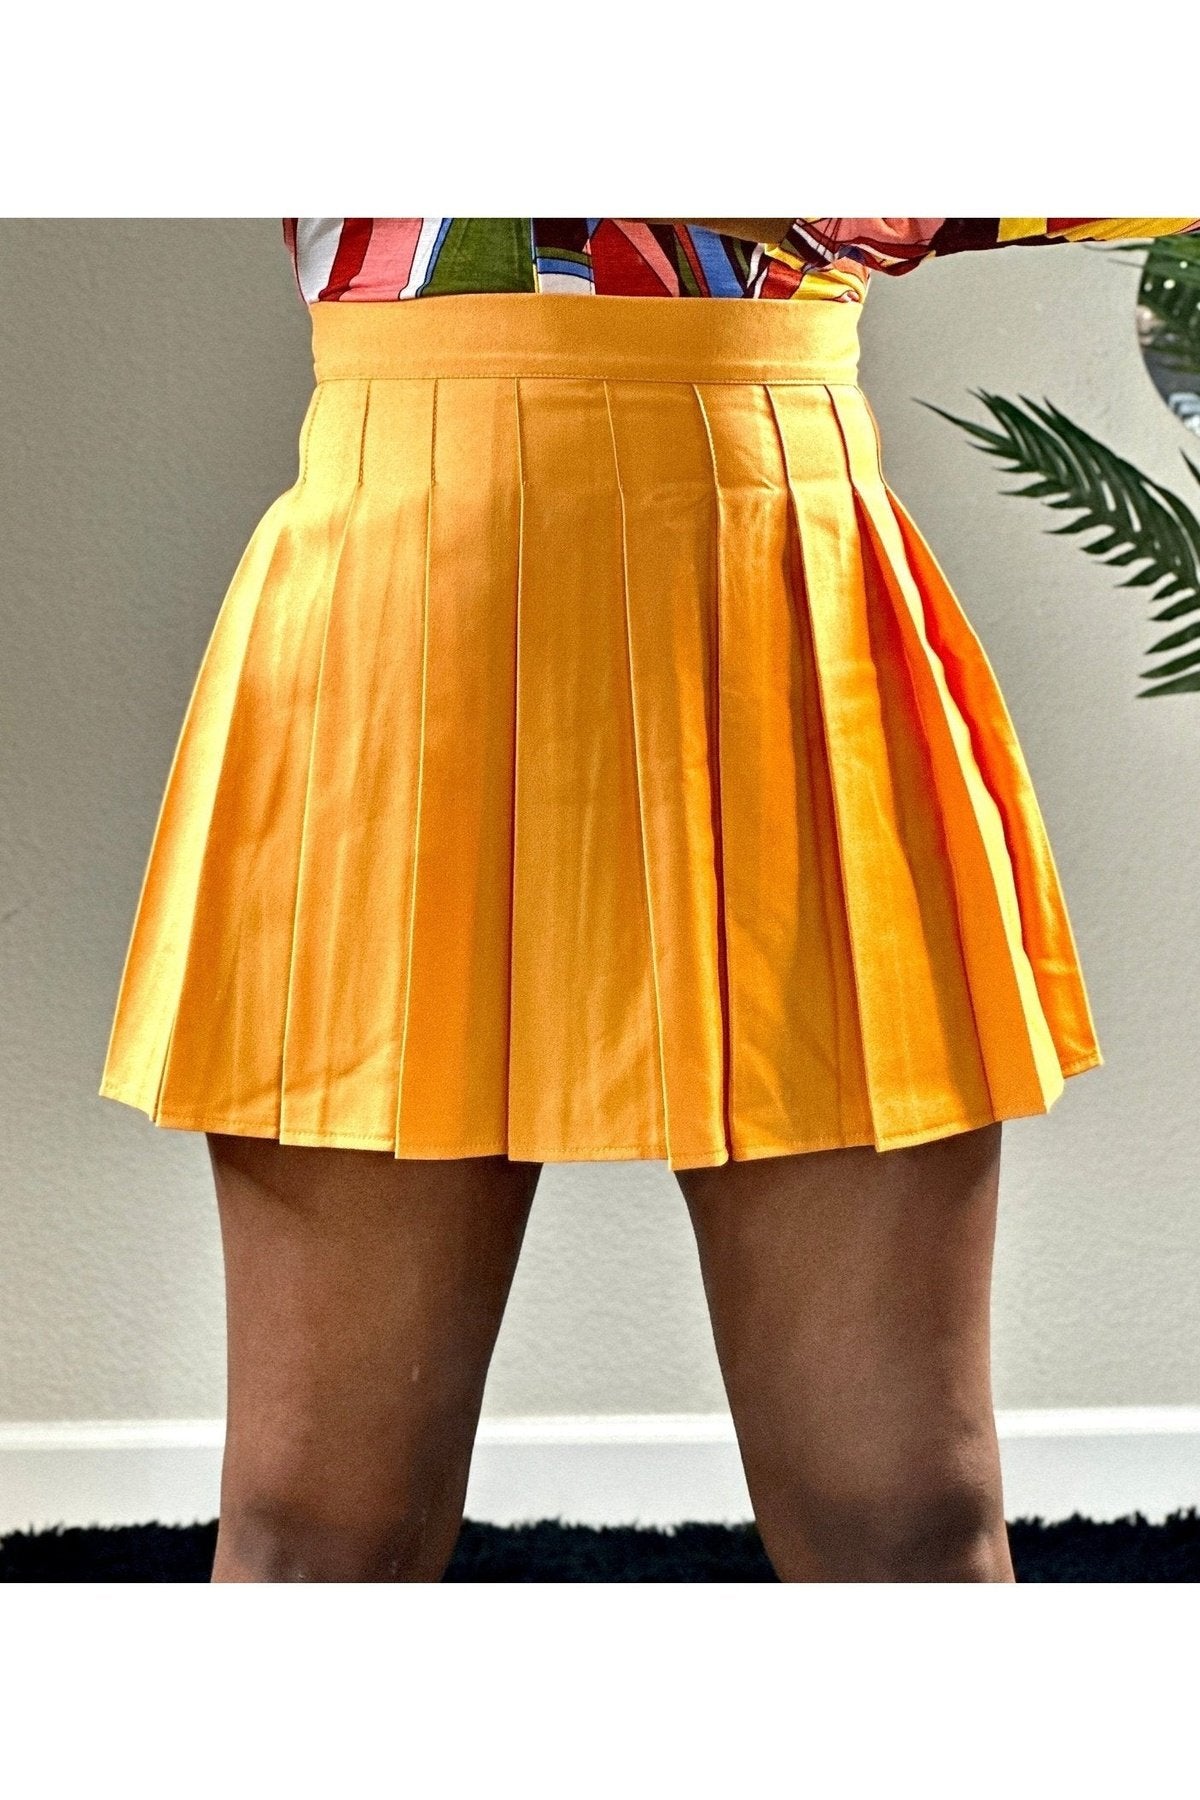 Mini me skirt Honey BeeU Boutique bottoms, orange, sales, skirt